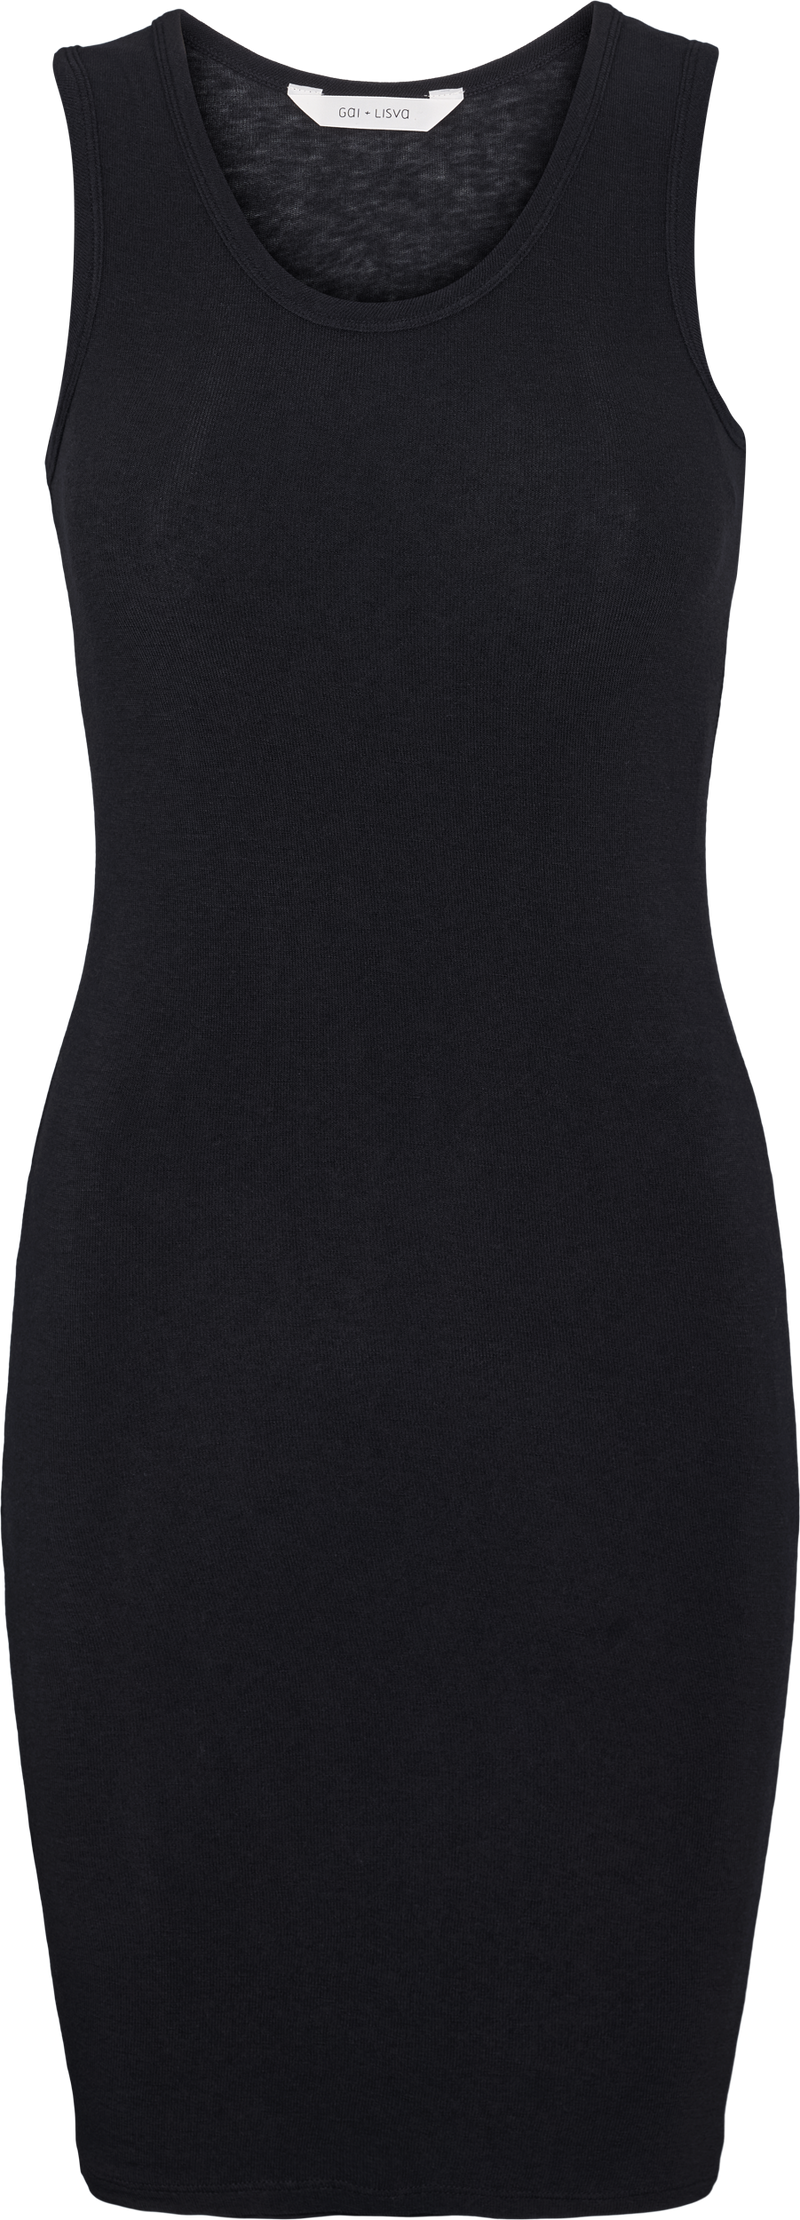 GAI+LISVA Anis Wool Slip Dress Top 650 Black